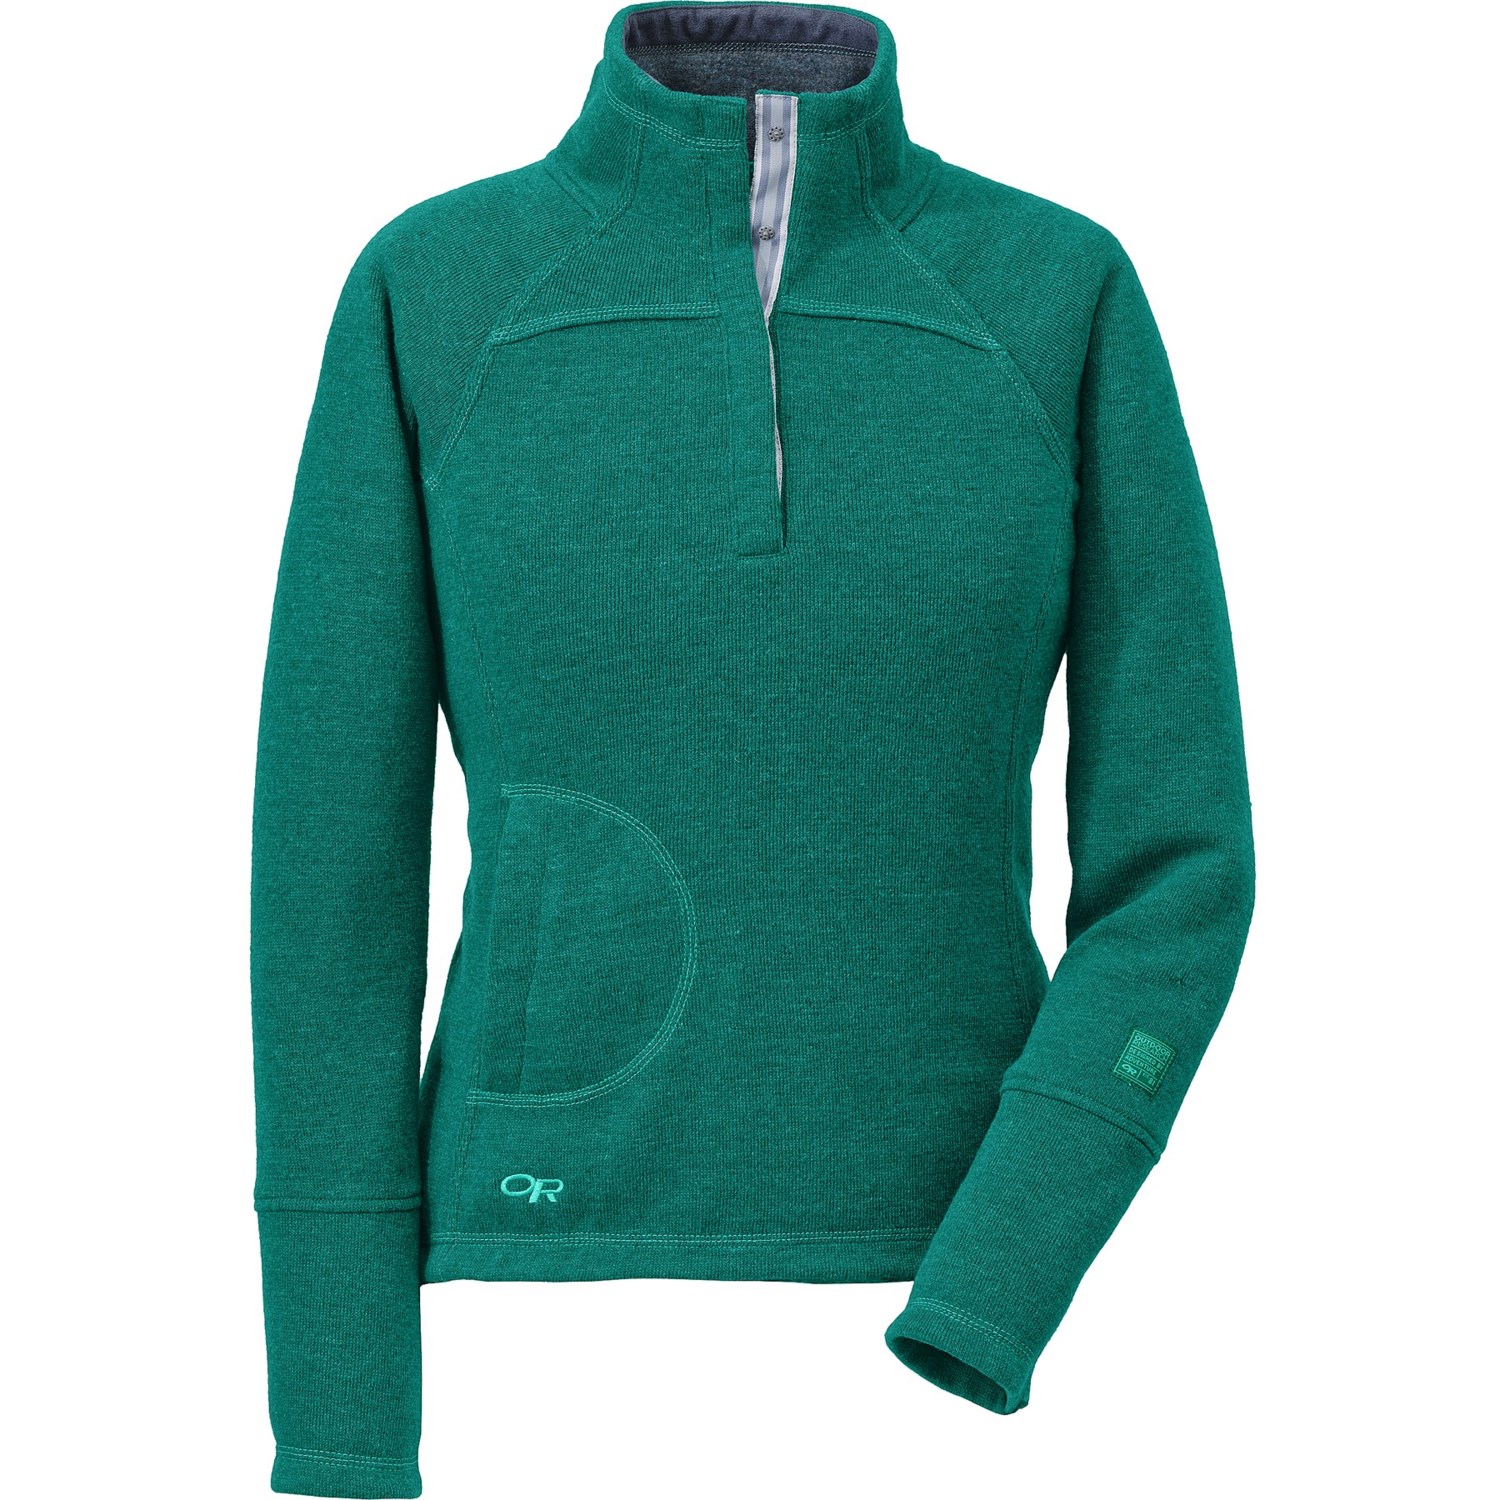 Outdoor Research Pelma Fleece Sweater (For Women) - Save 40%